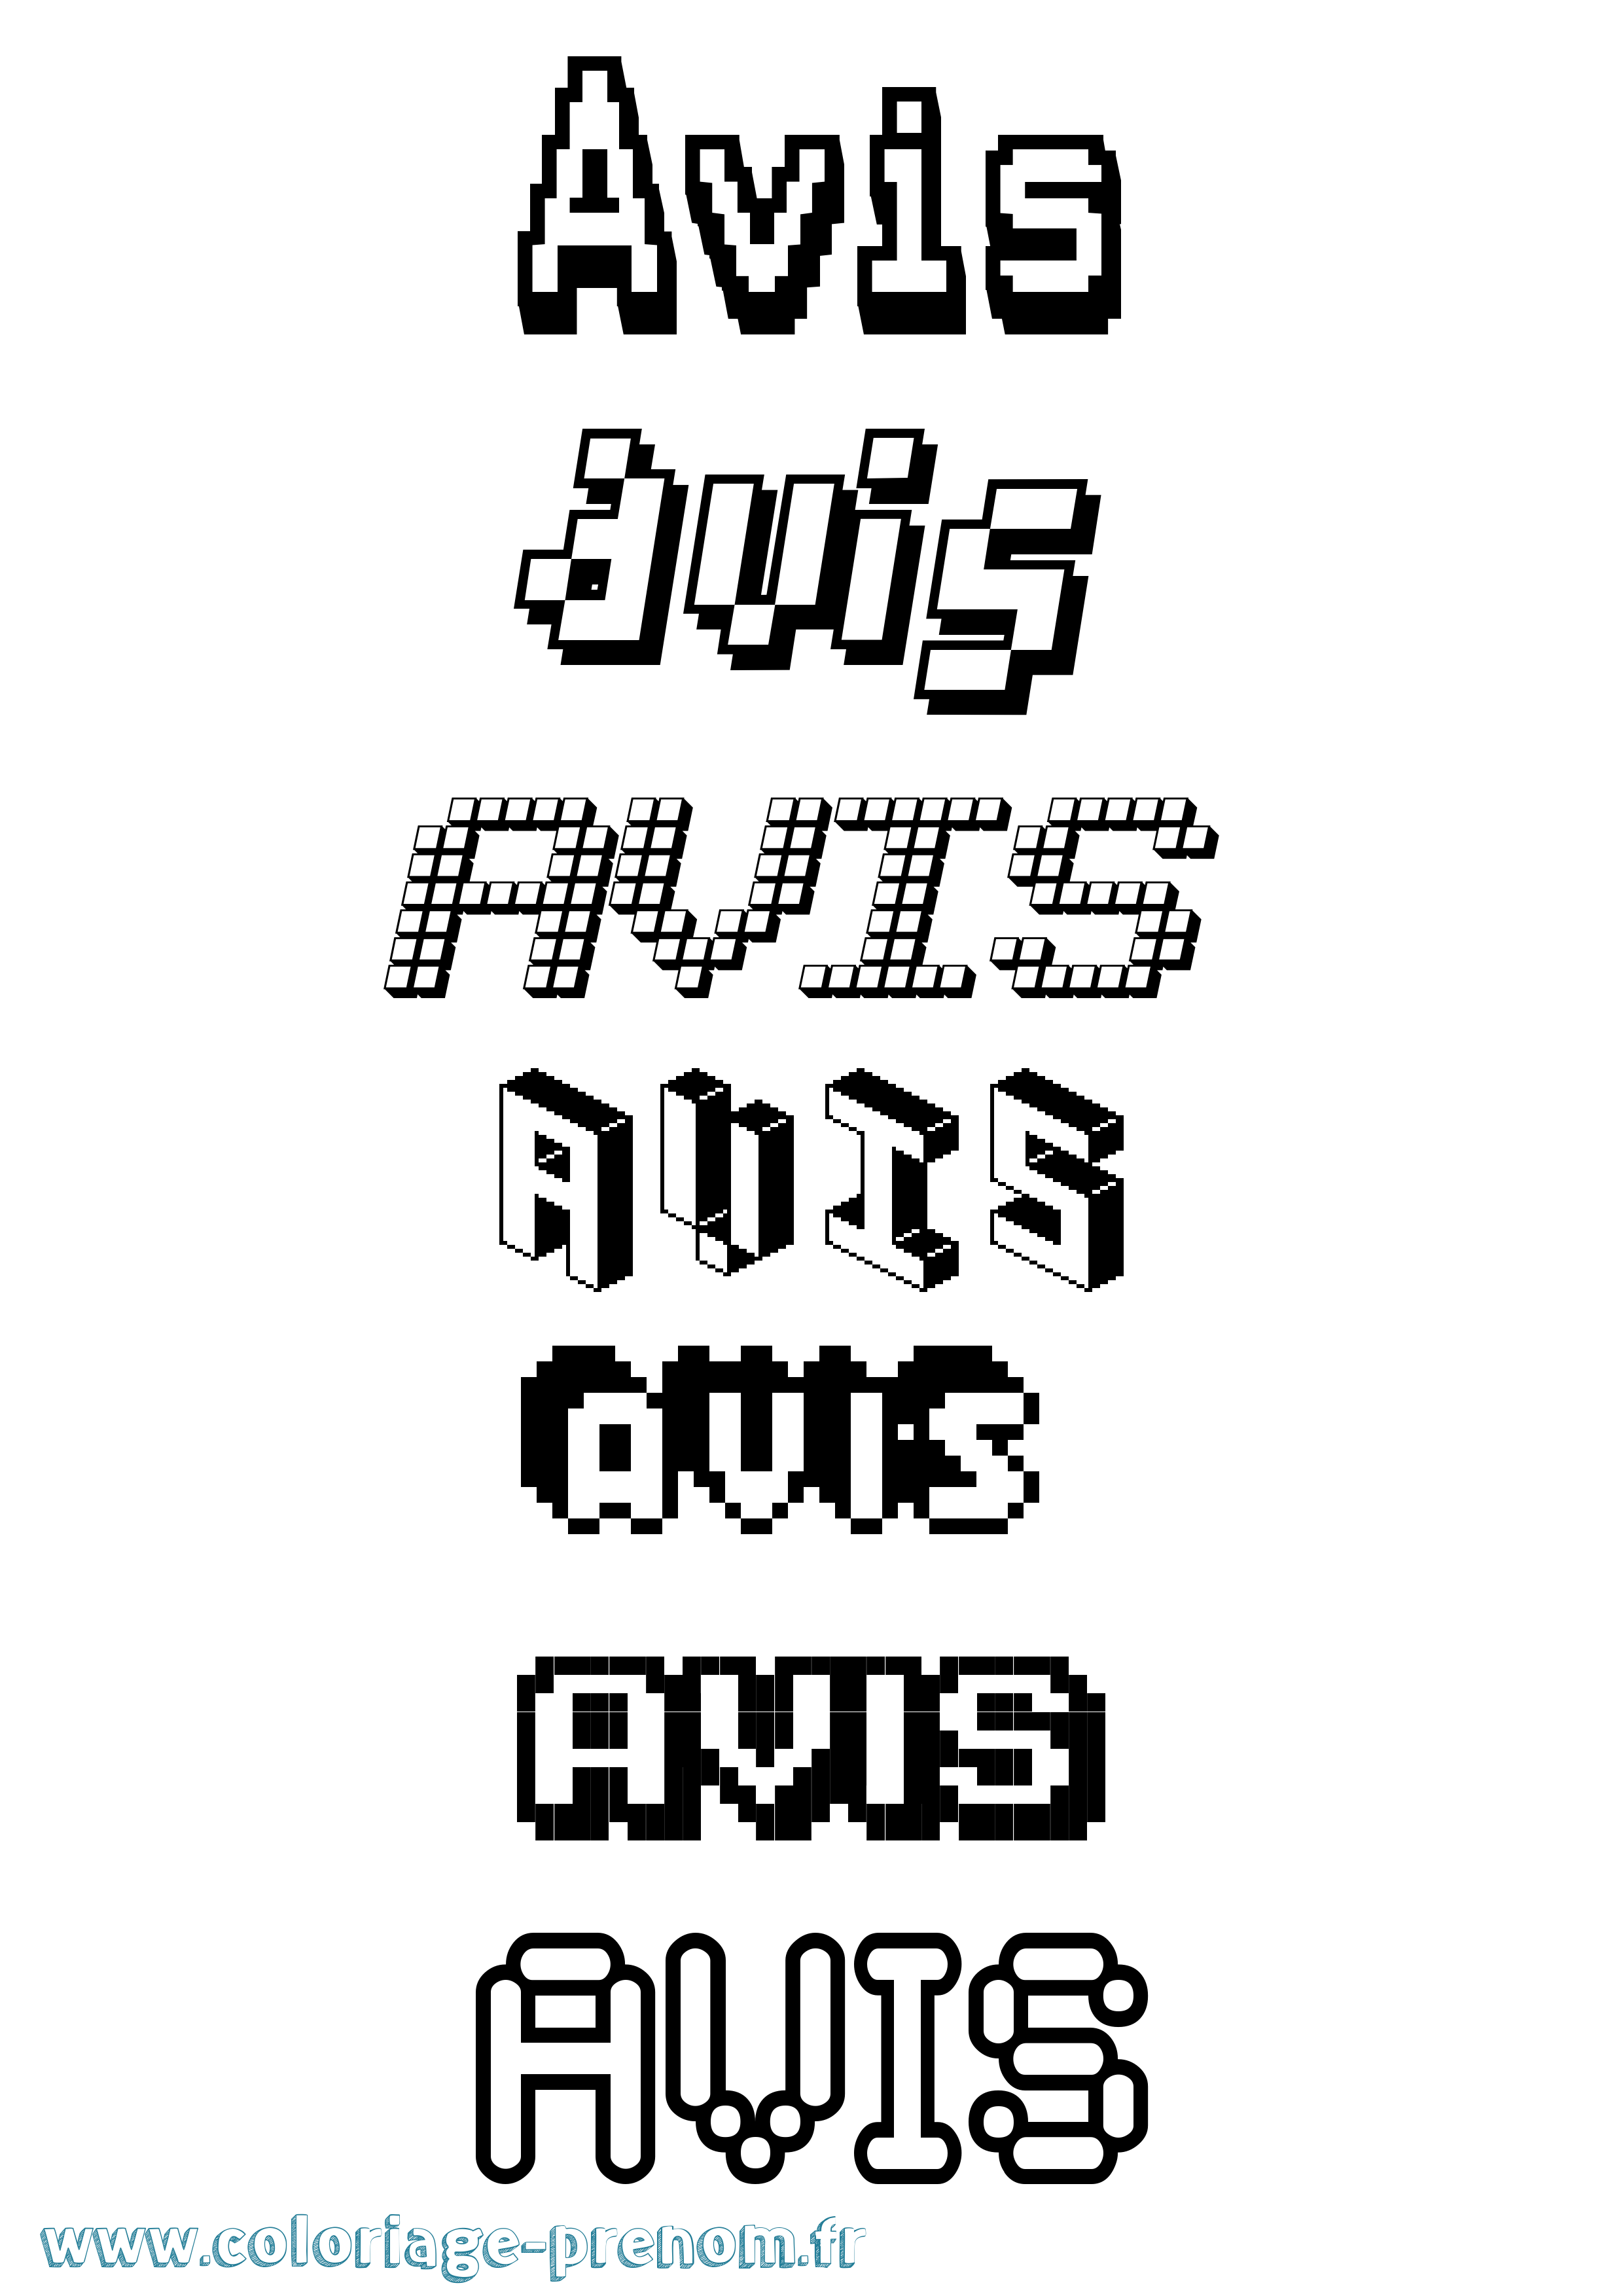 Coloriage prénom Avis Pixel